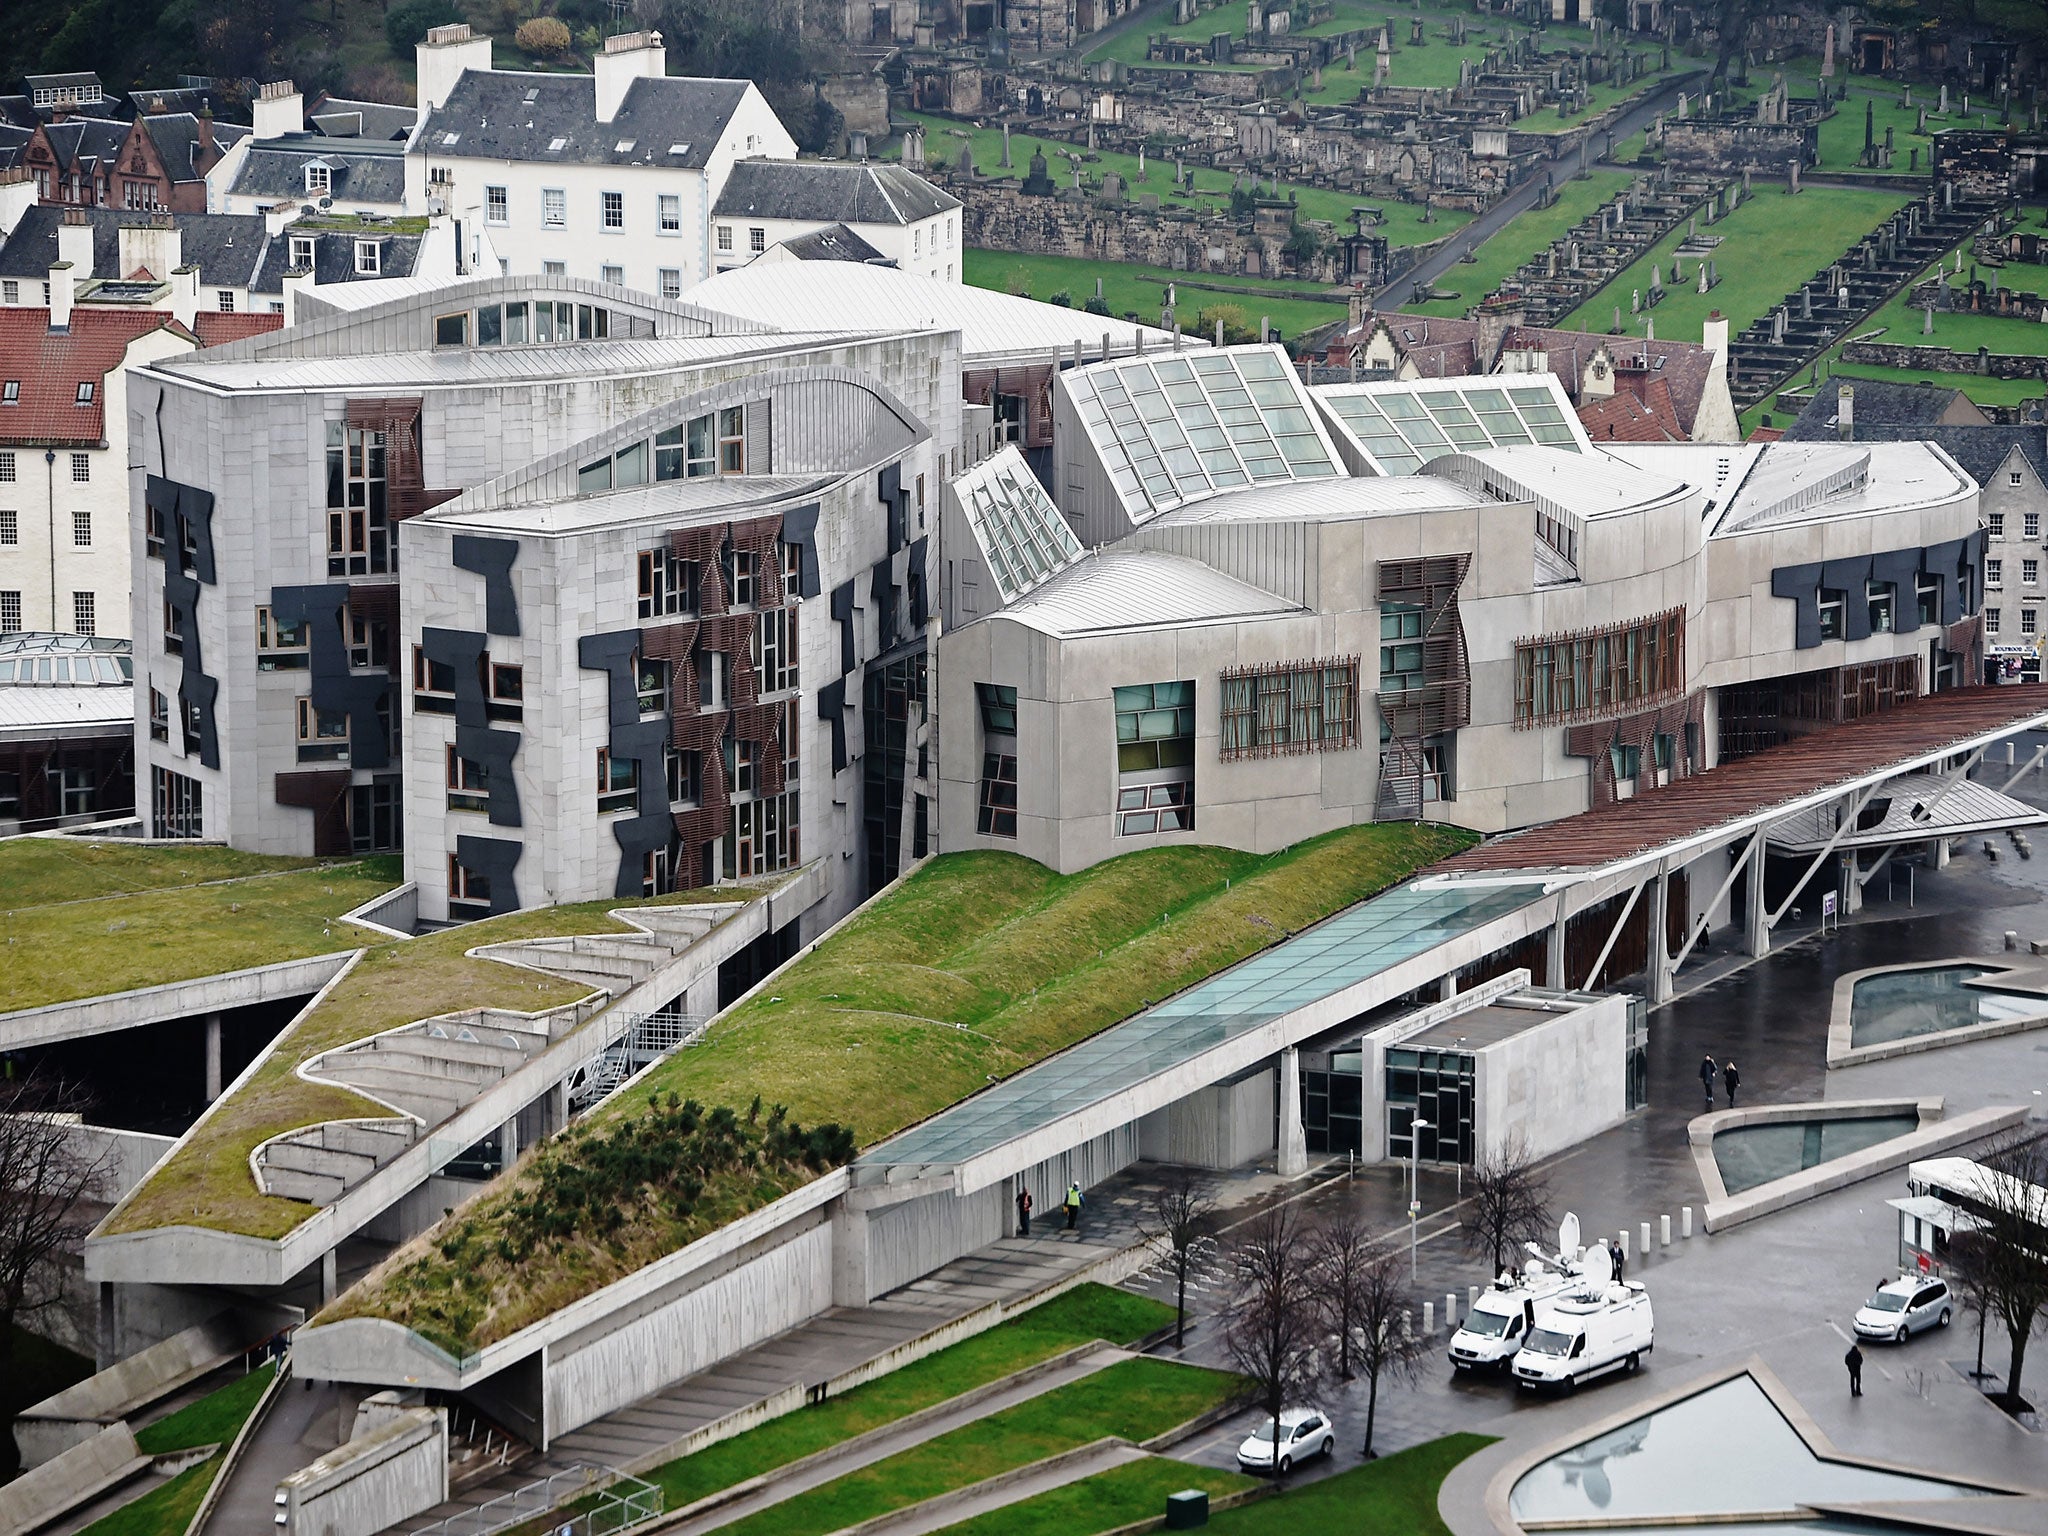 The Scottish Parliament at Holyrood